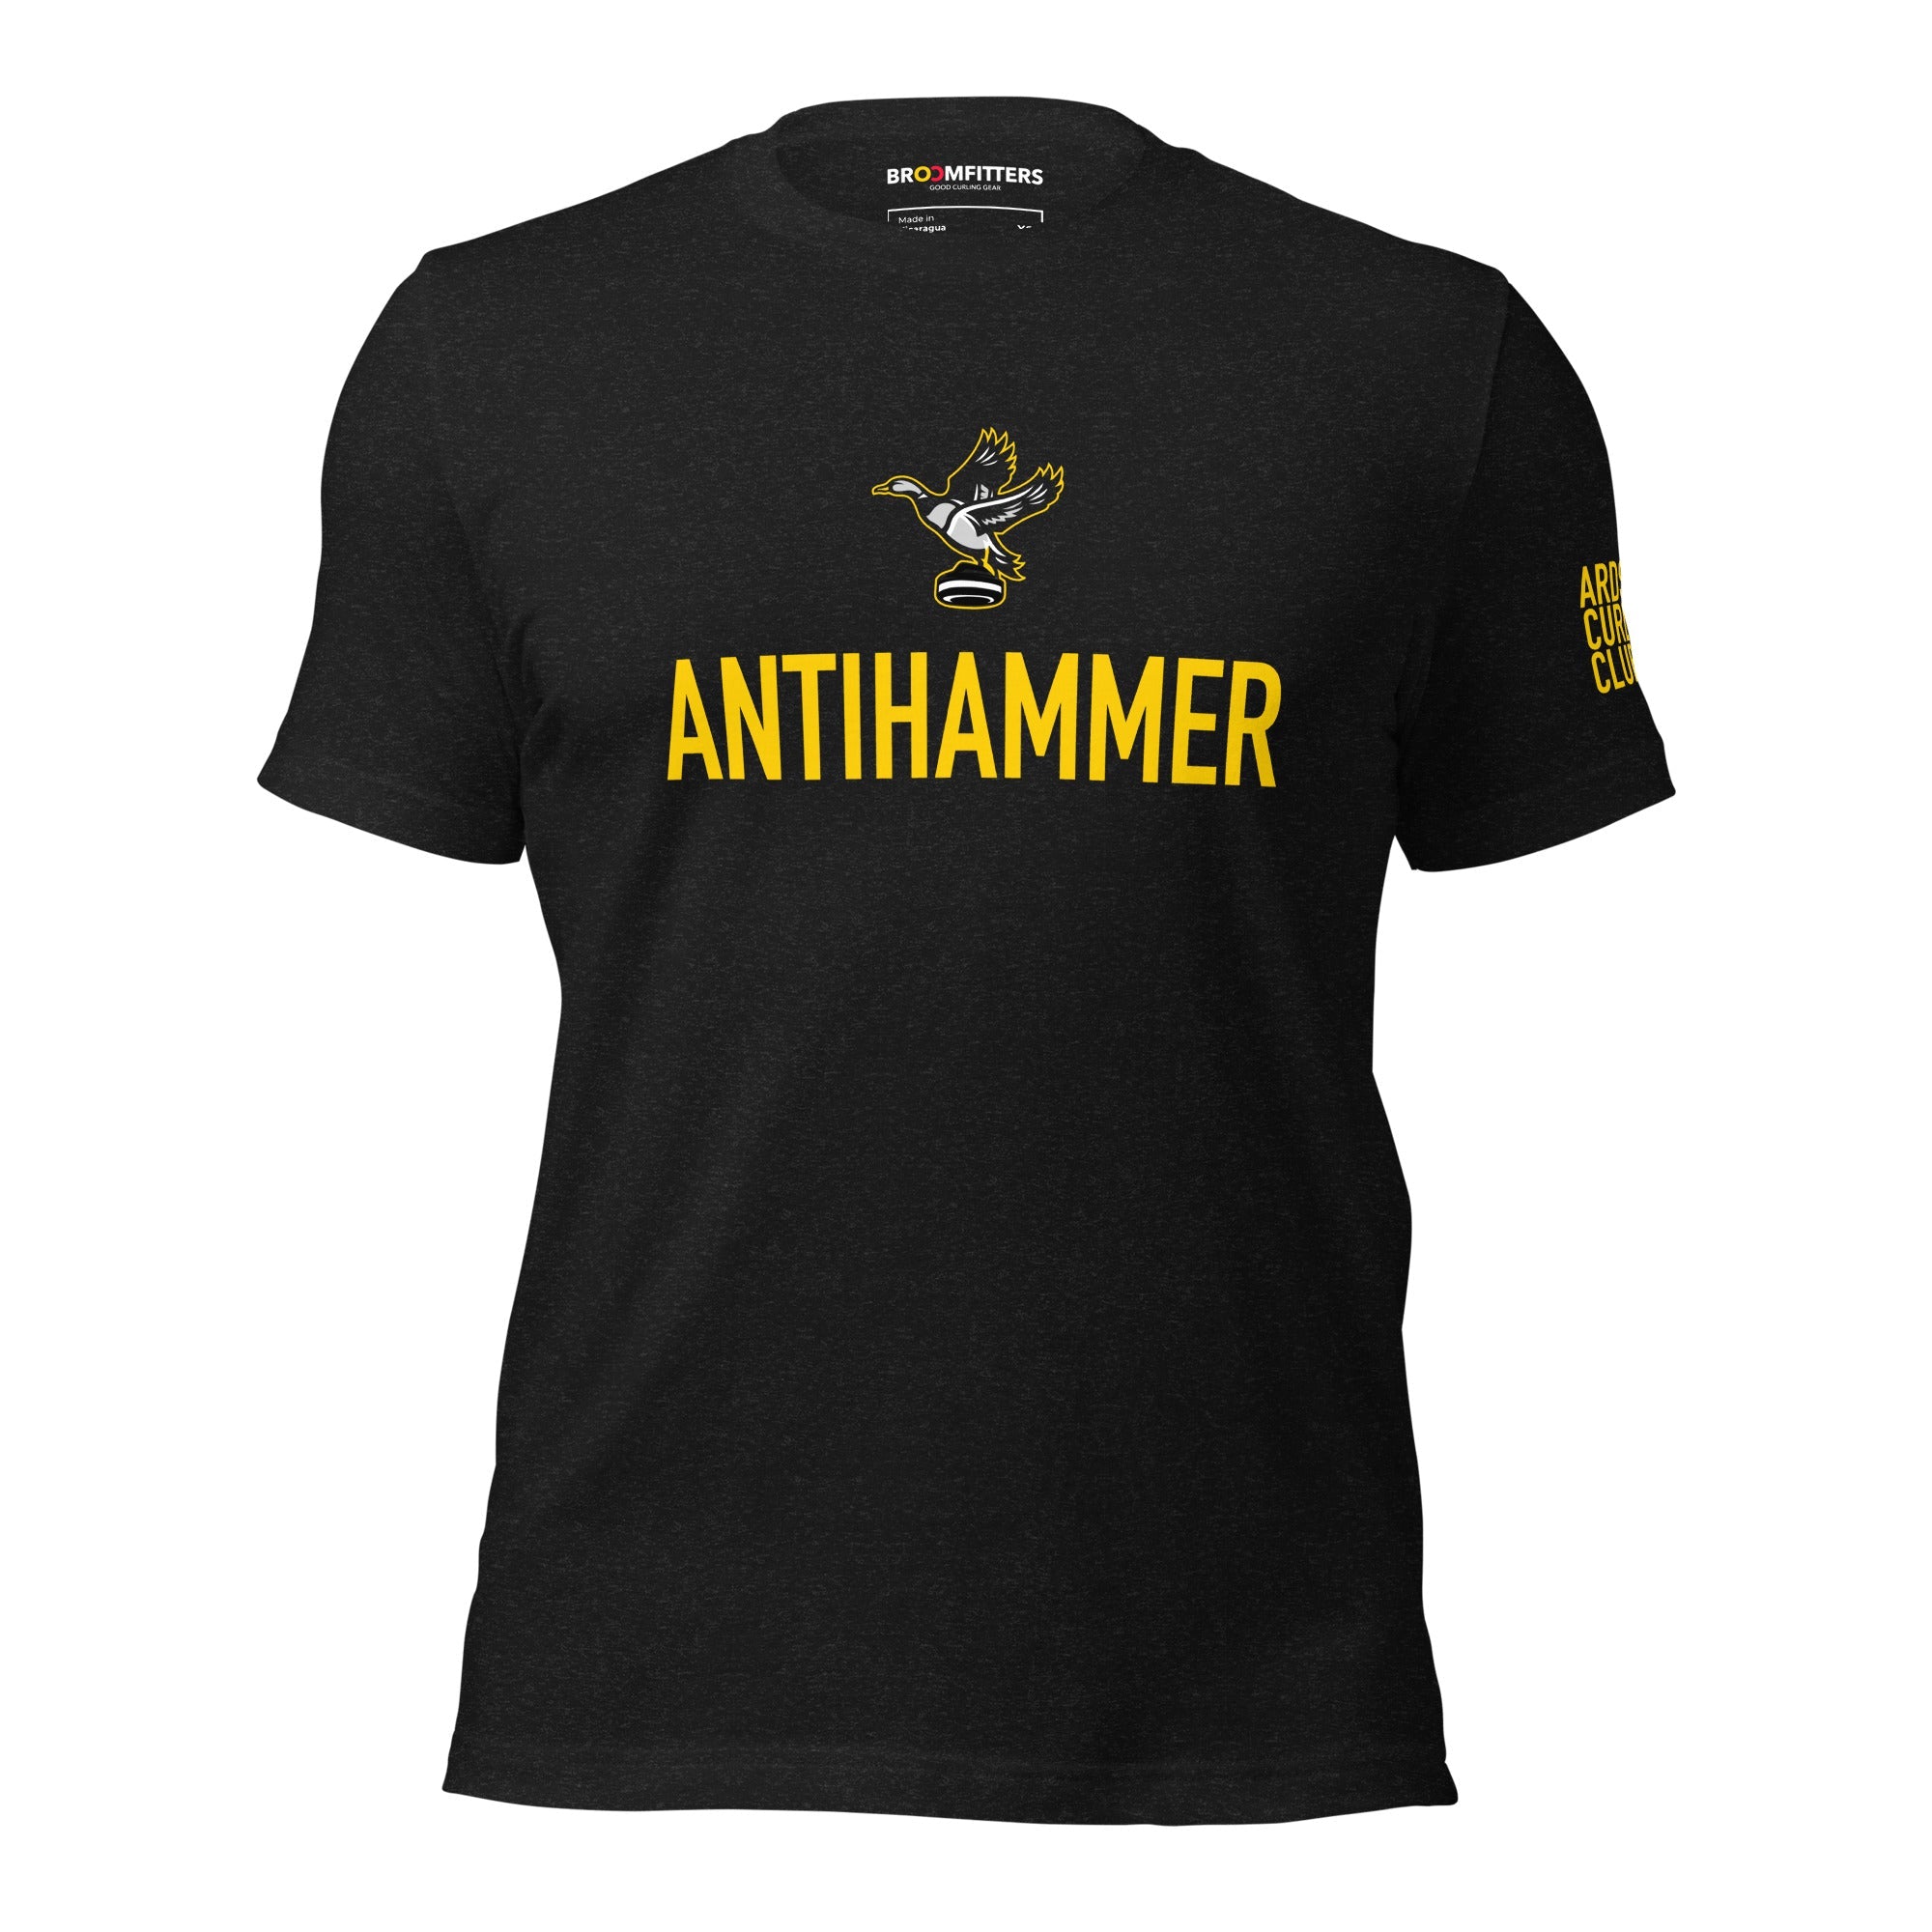 ANTIHAMMER T-shirt - Ardsley Curling Club